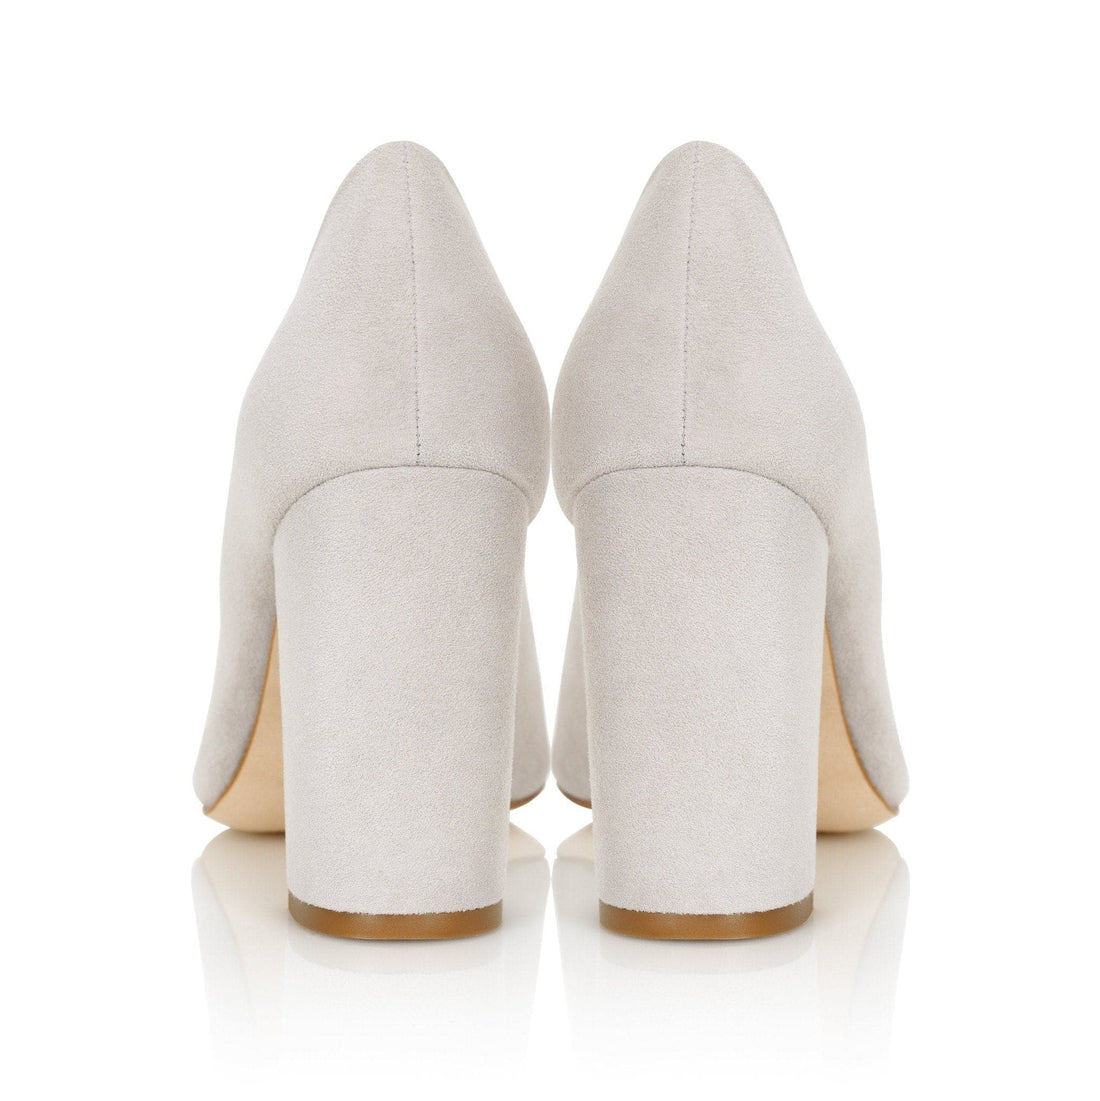 Mia Vapour Fashion Shoe Grey Suede Block Heels